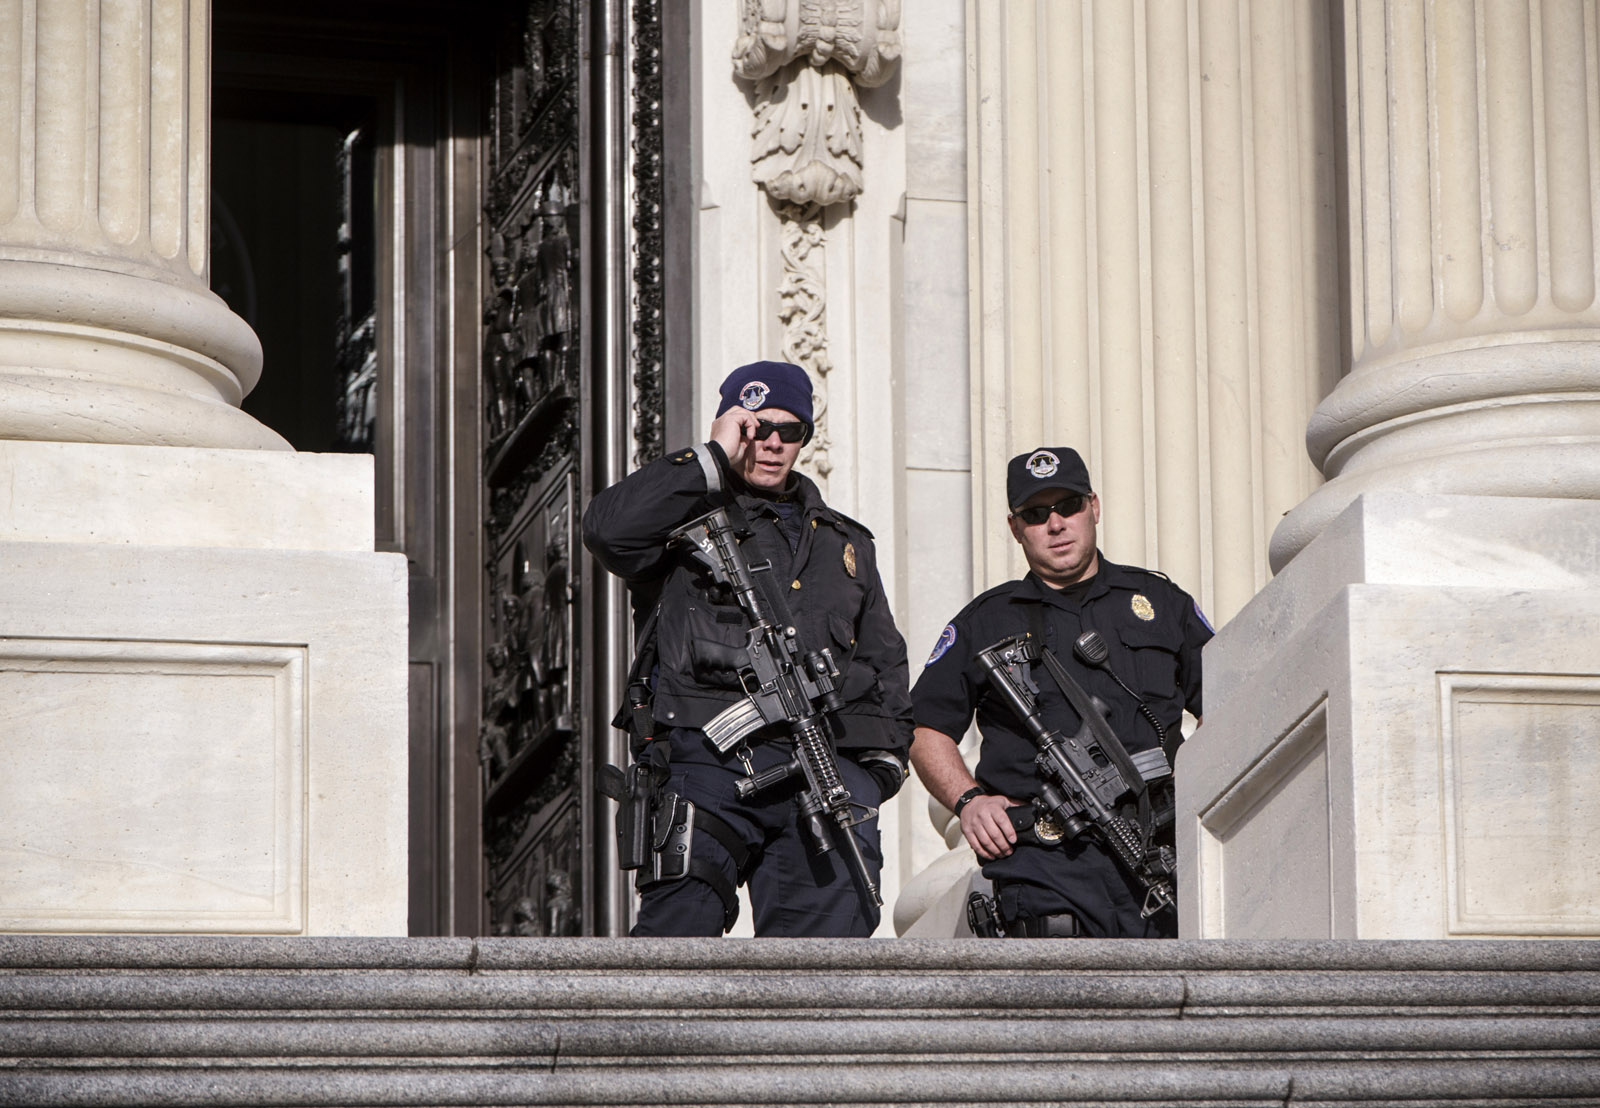 D.C. region boosts vigilance after Brussels terror attacks